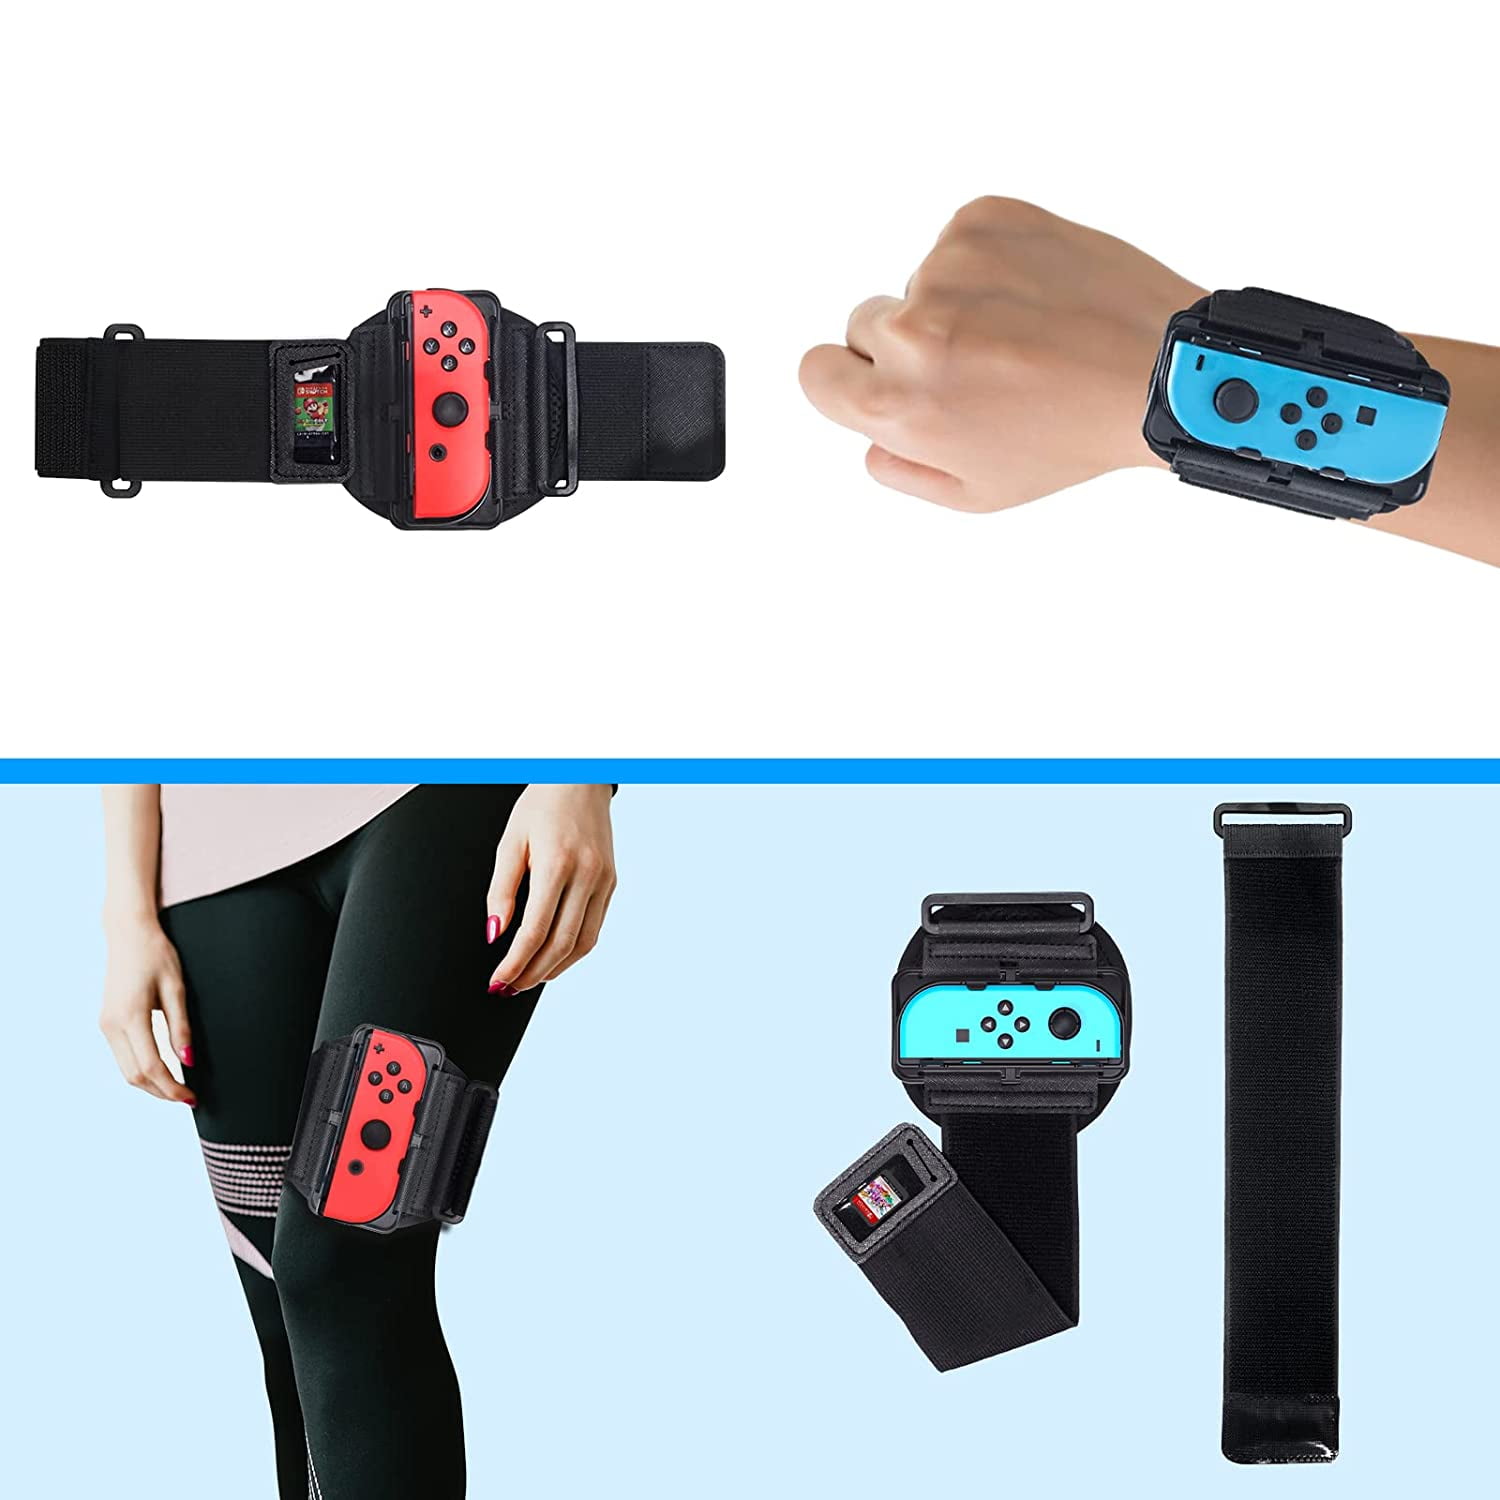 NINTENDO-Nintendo Switch Sports with Leg Strap (CHT)